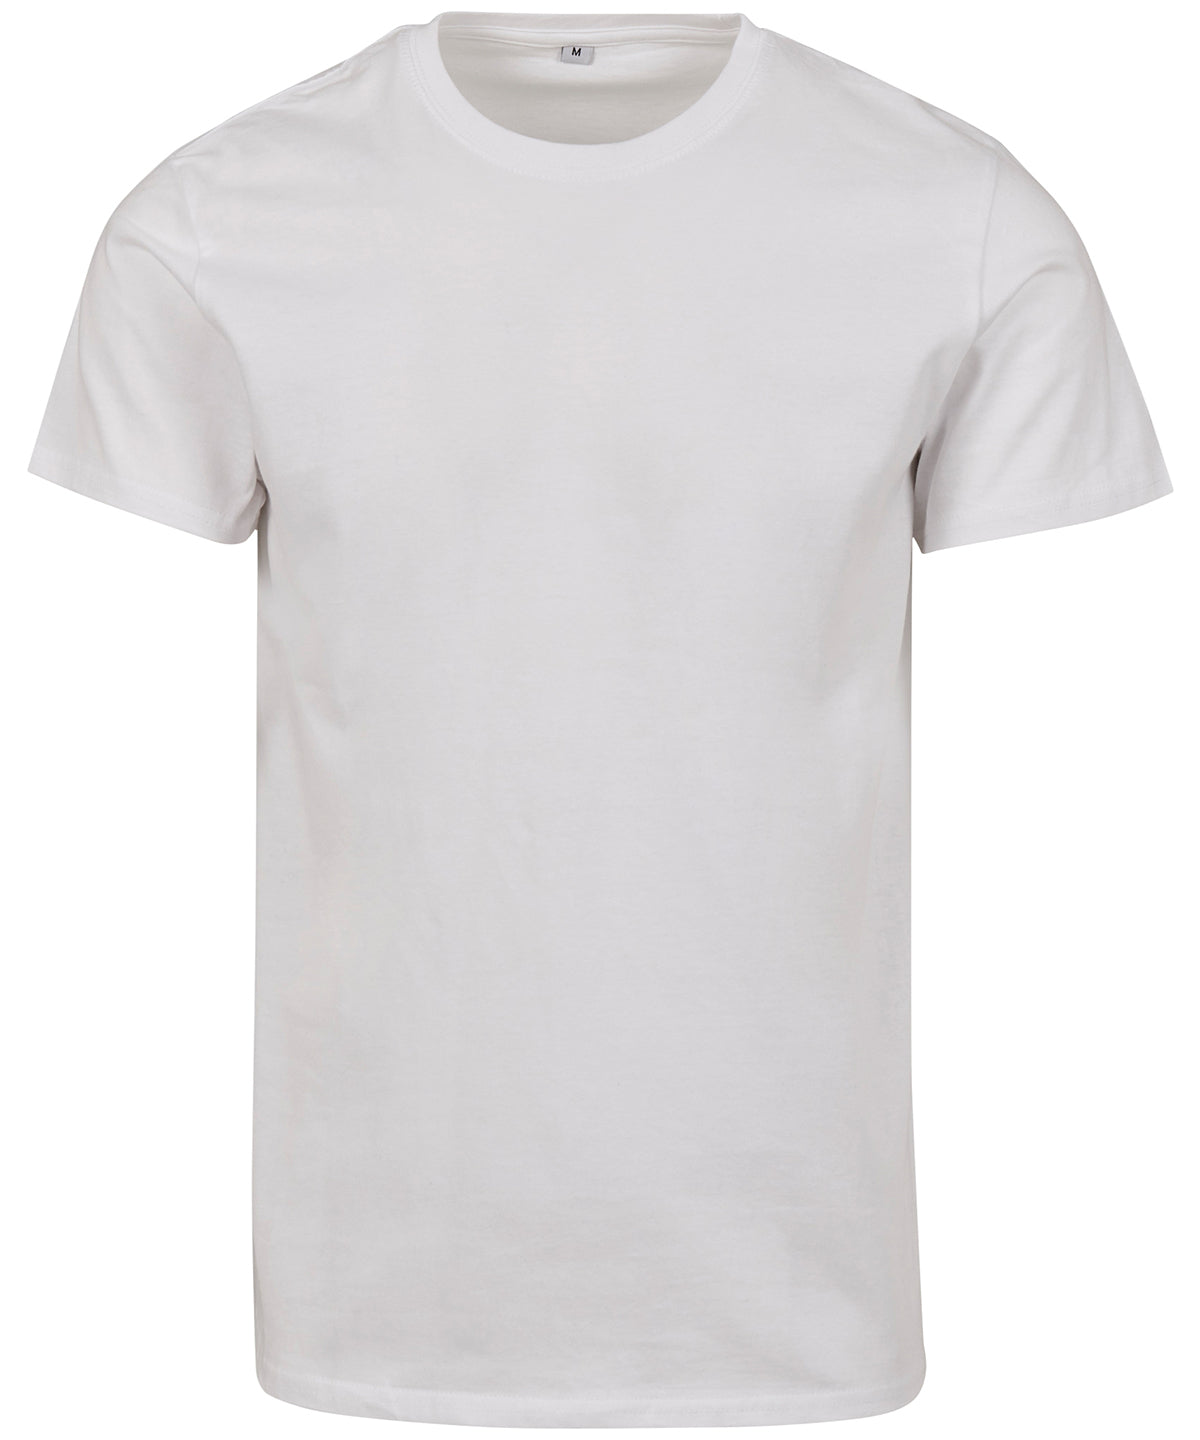 Stuttermabolir - Merch T-shirt